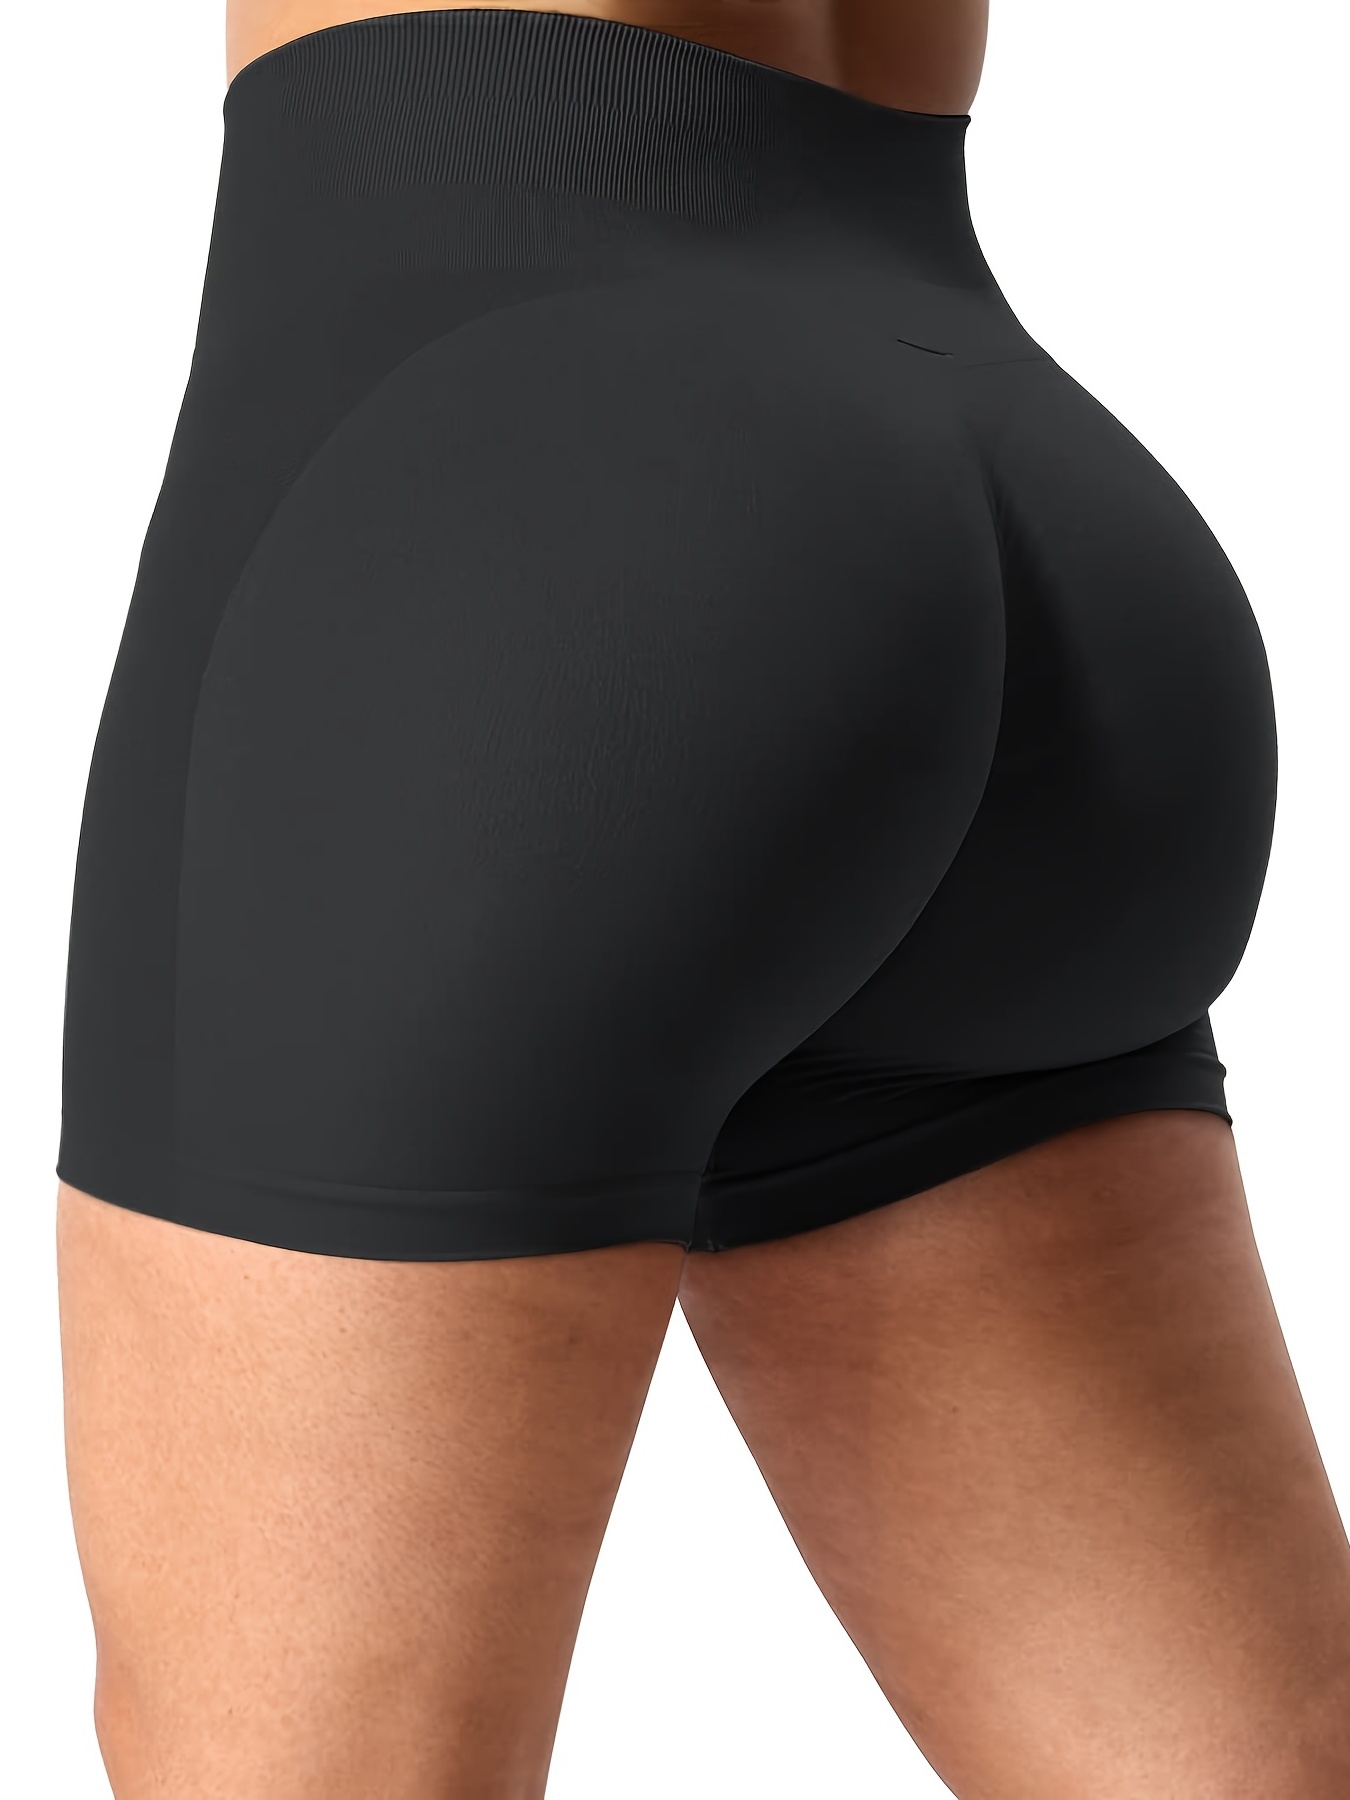 nsendm Waisted Lifting Shorts Waist High Shorts Biker Women Workout V Yoga  Shorts Yoga Pants Women Petite Short Shorts Black Small 